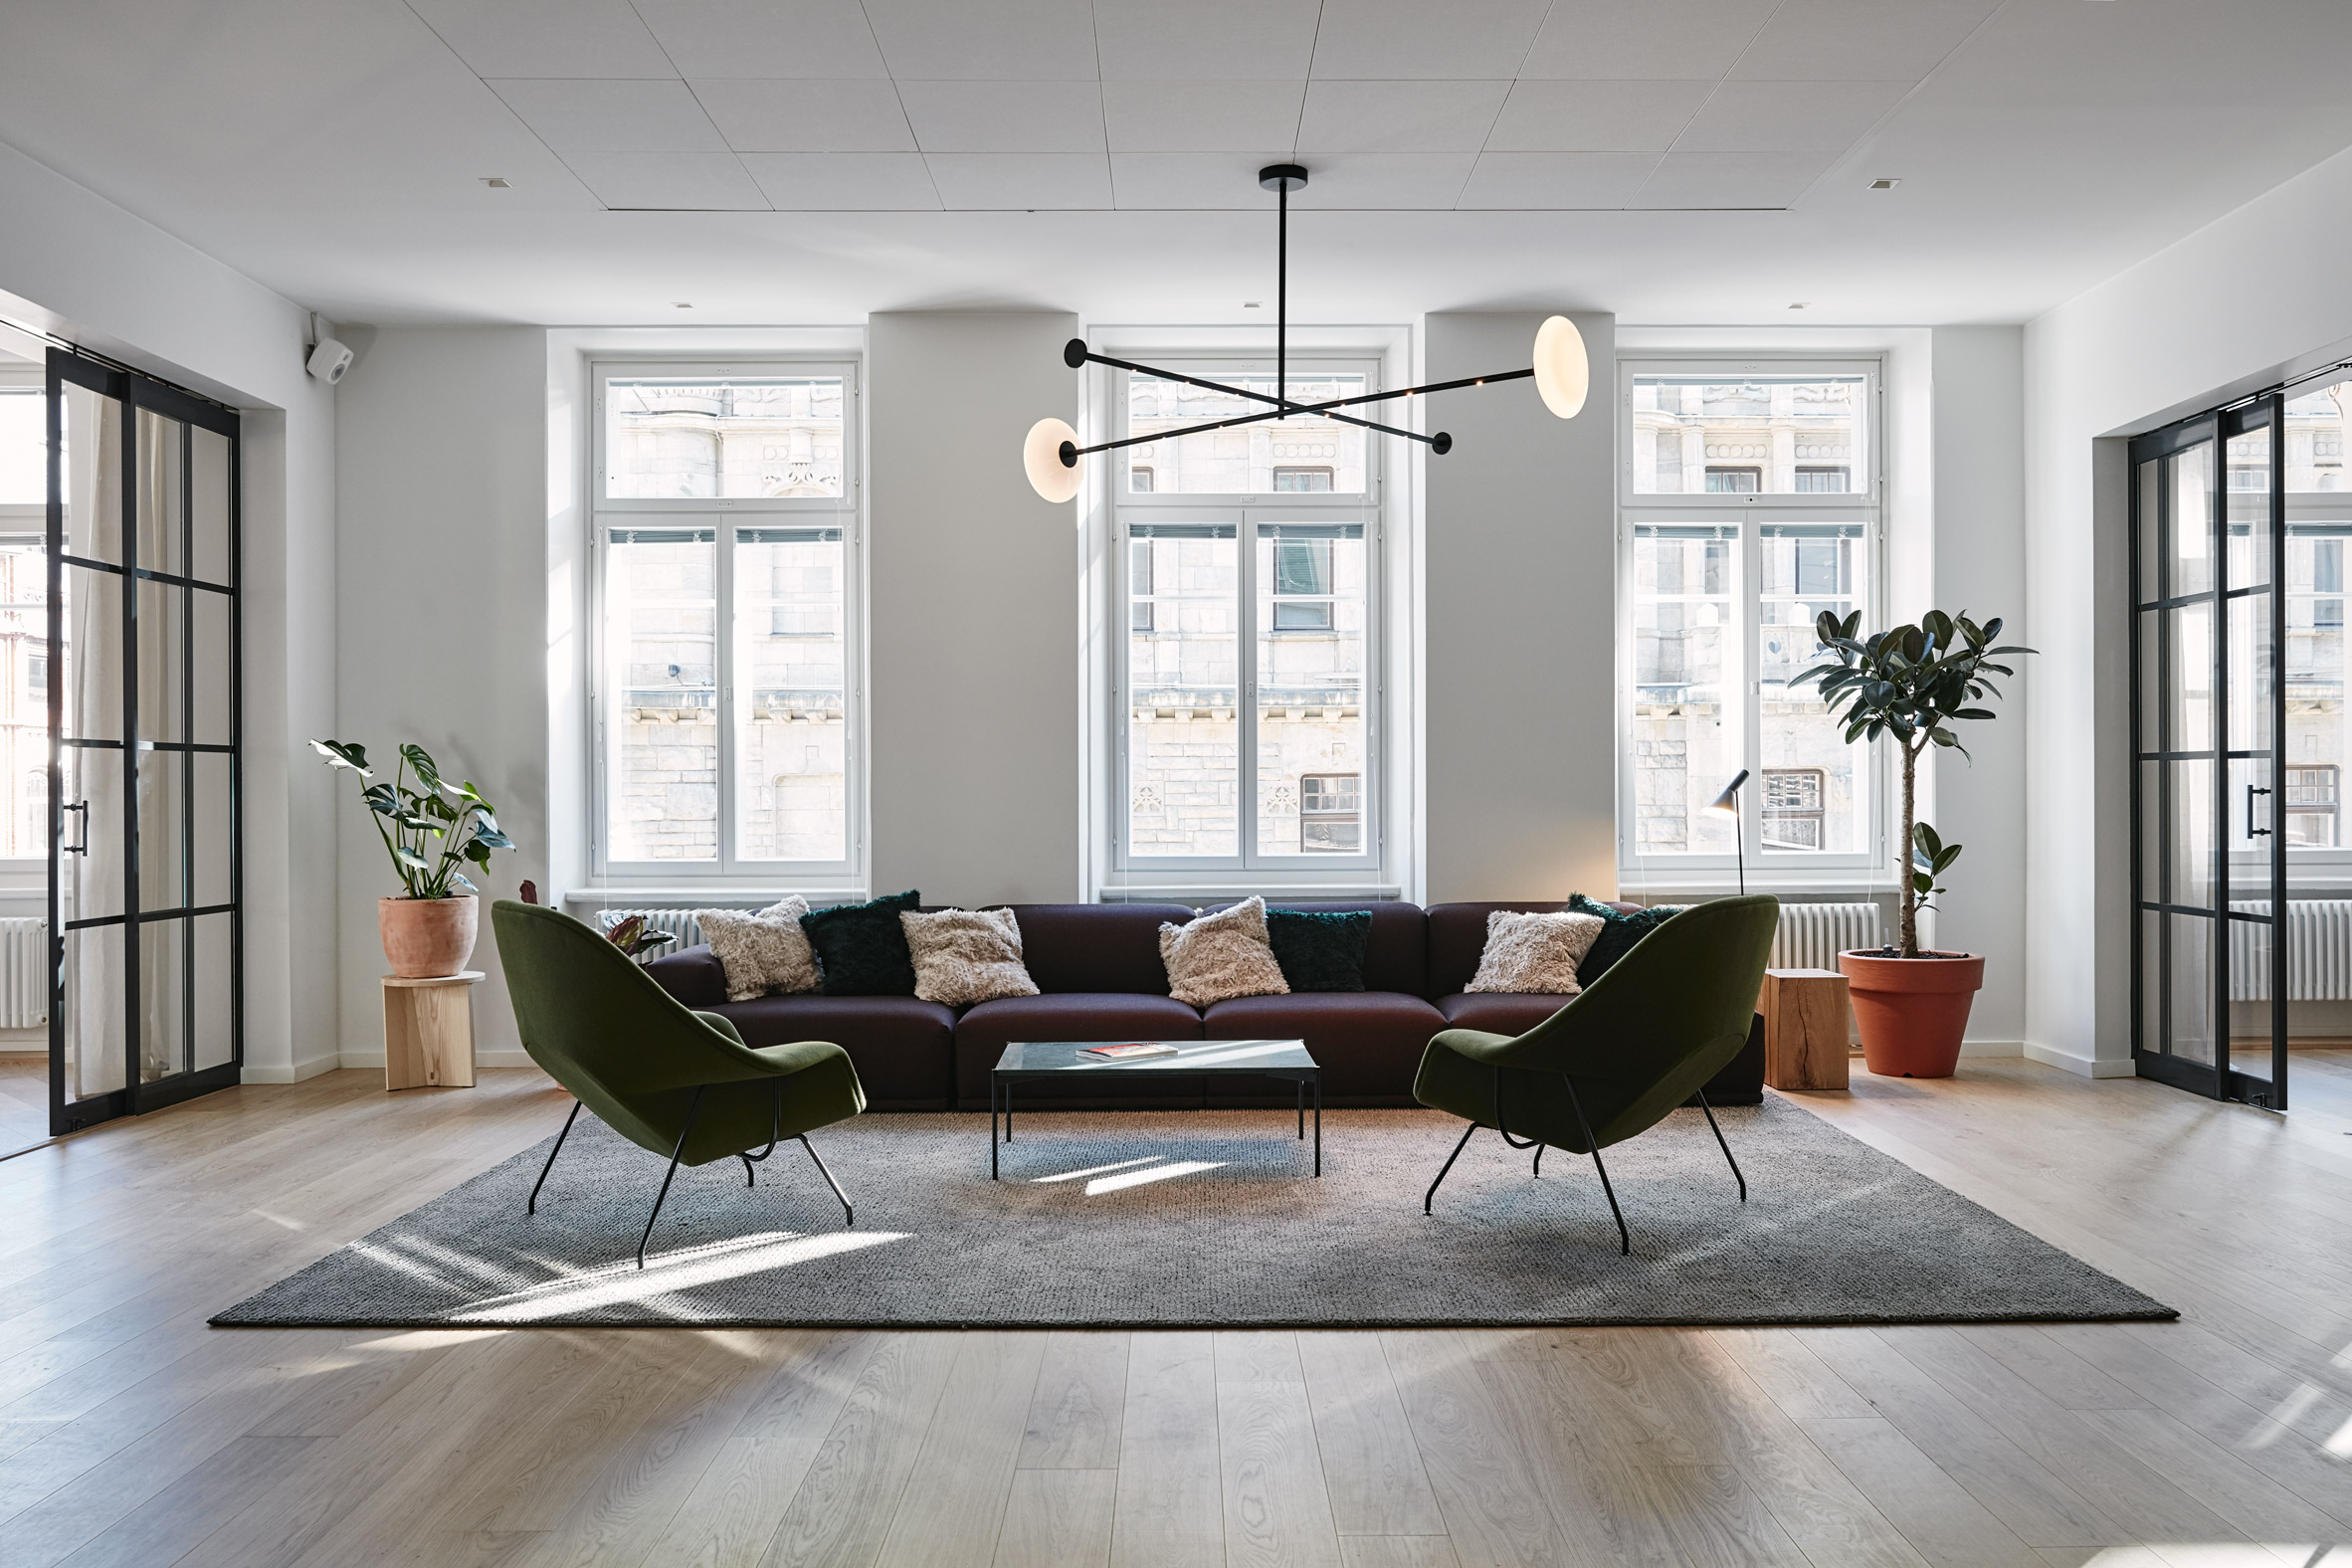 Joanna Laajisto creates "elegant, unconventional and human" workspace for design studio Fjord